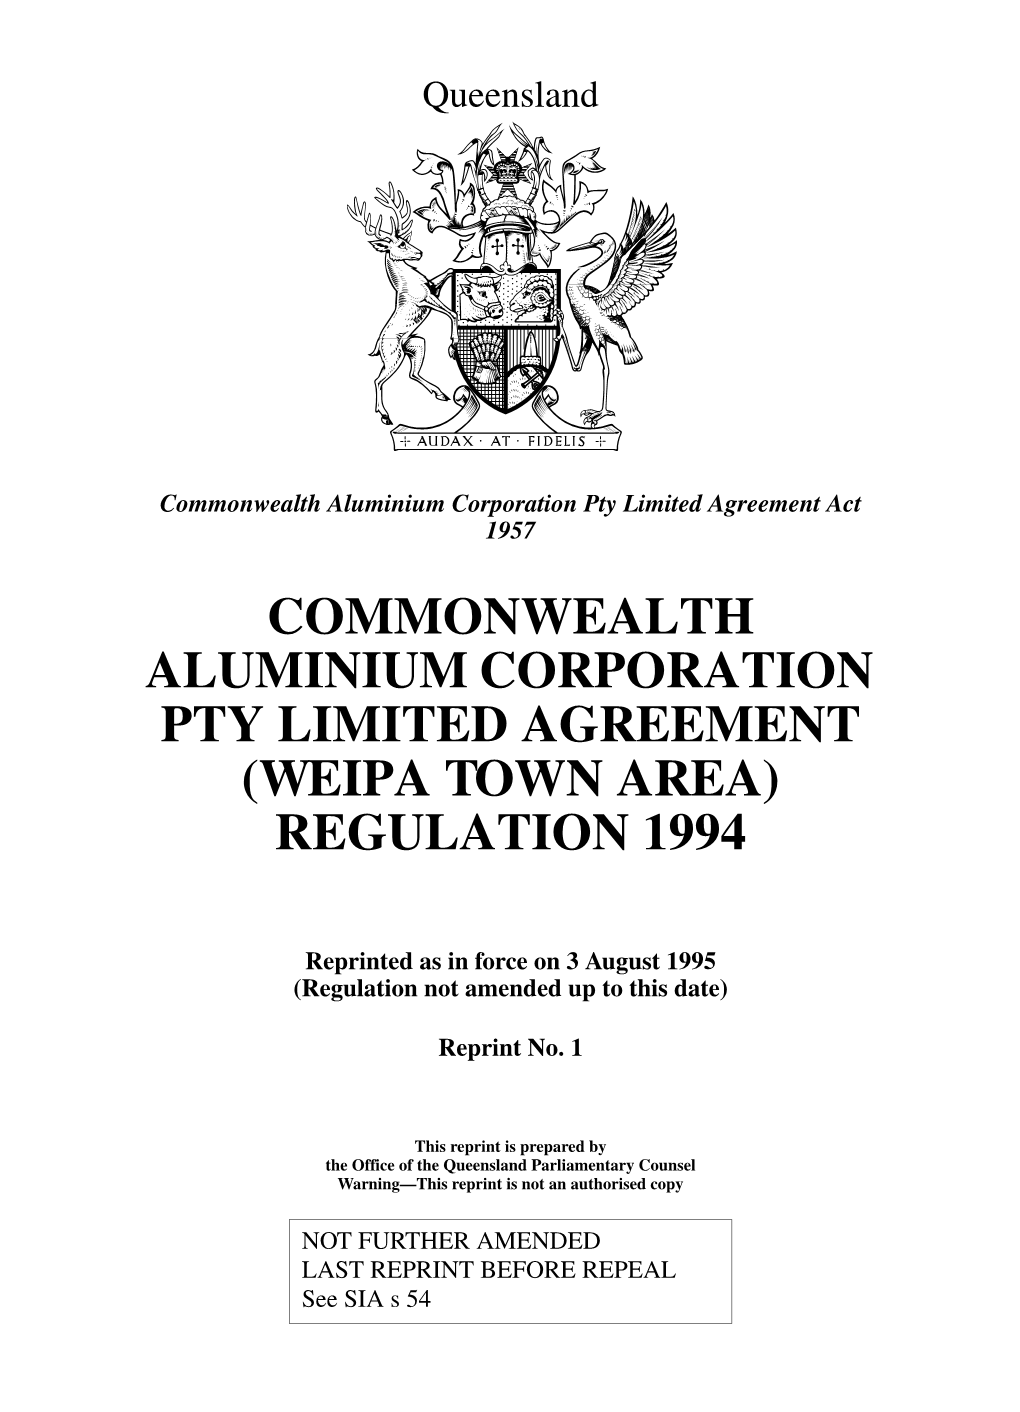 Commonwealth Aluminium Corporation Pty Limited Agreement (Weipa Town Area) Regulation 1994